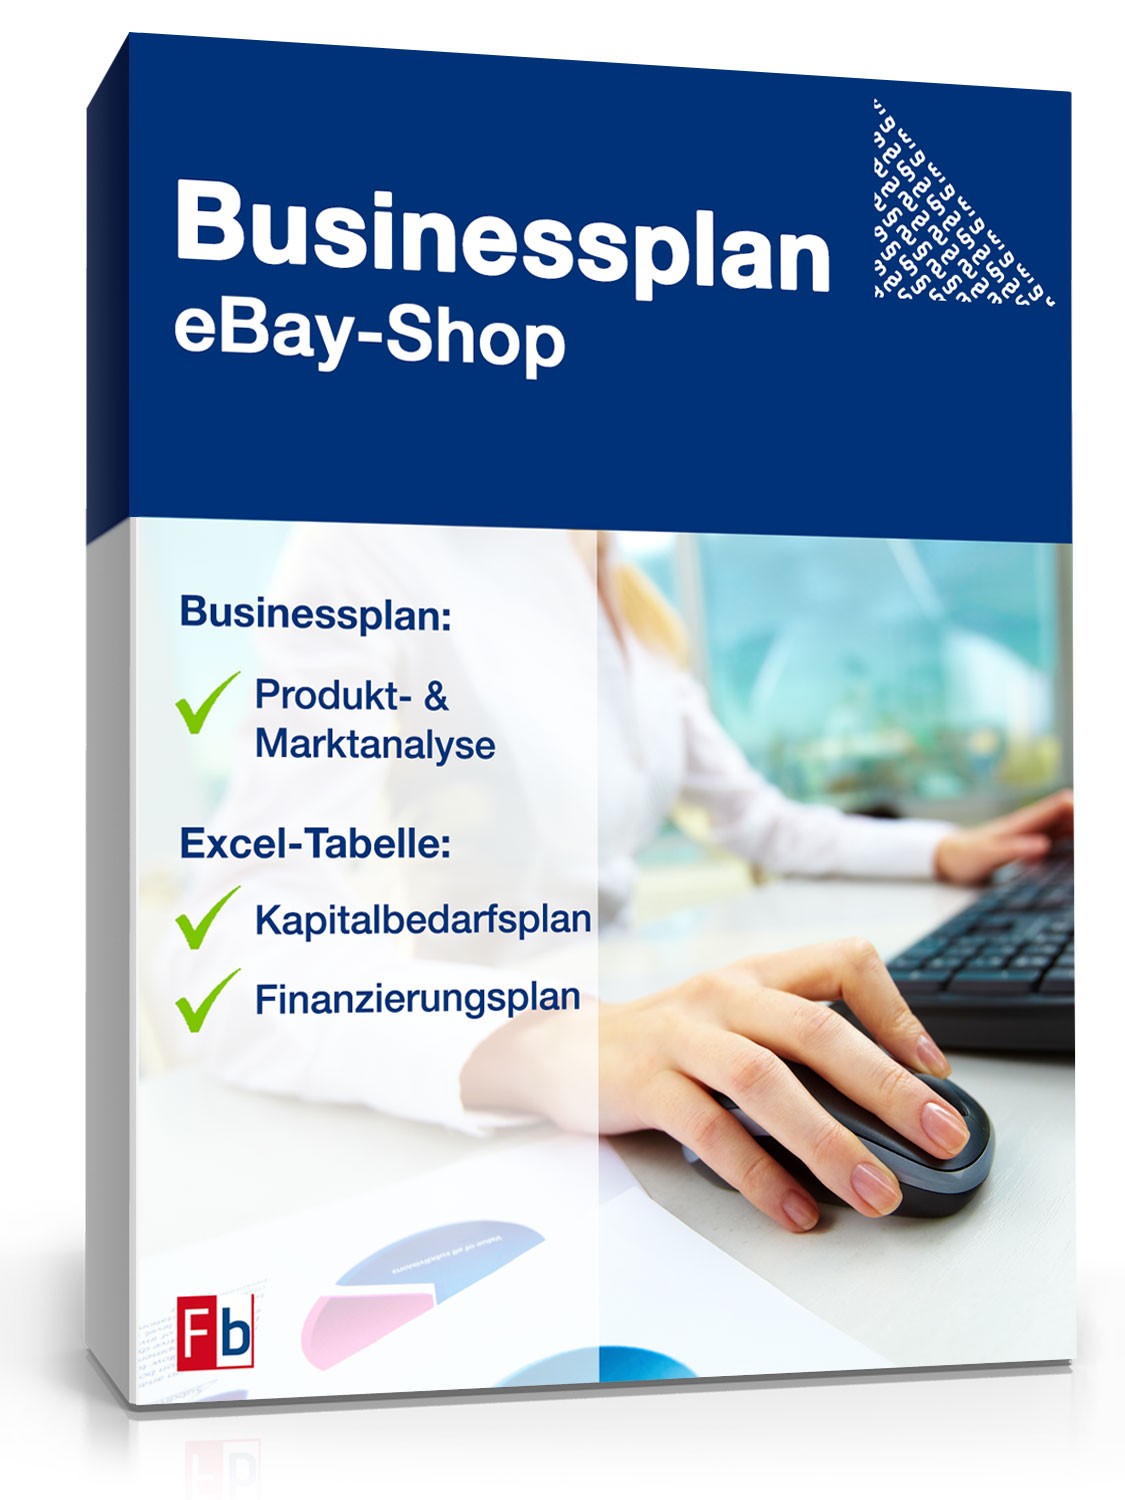 ebay seller business plan pdf